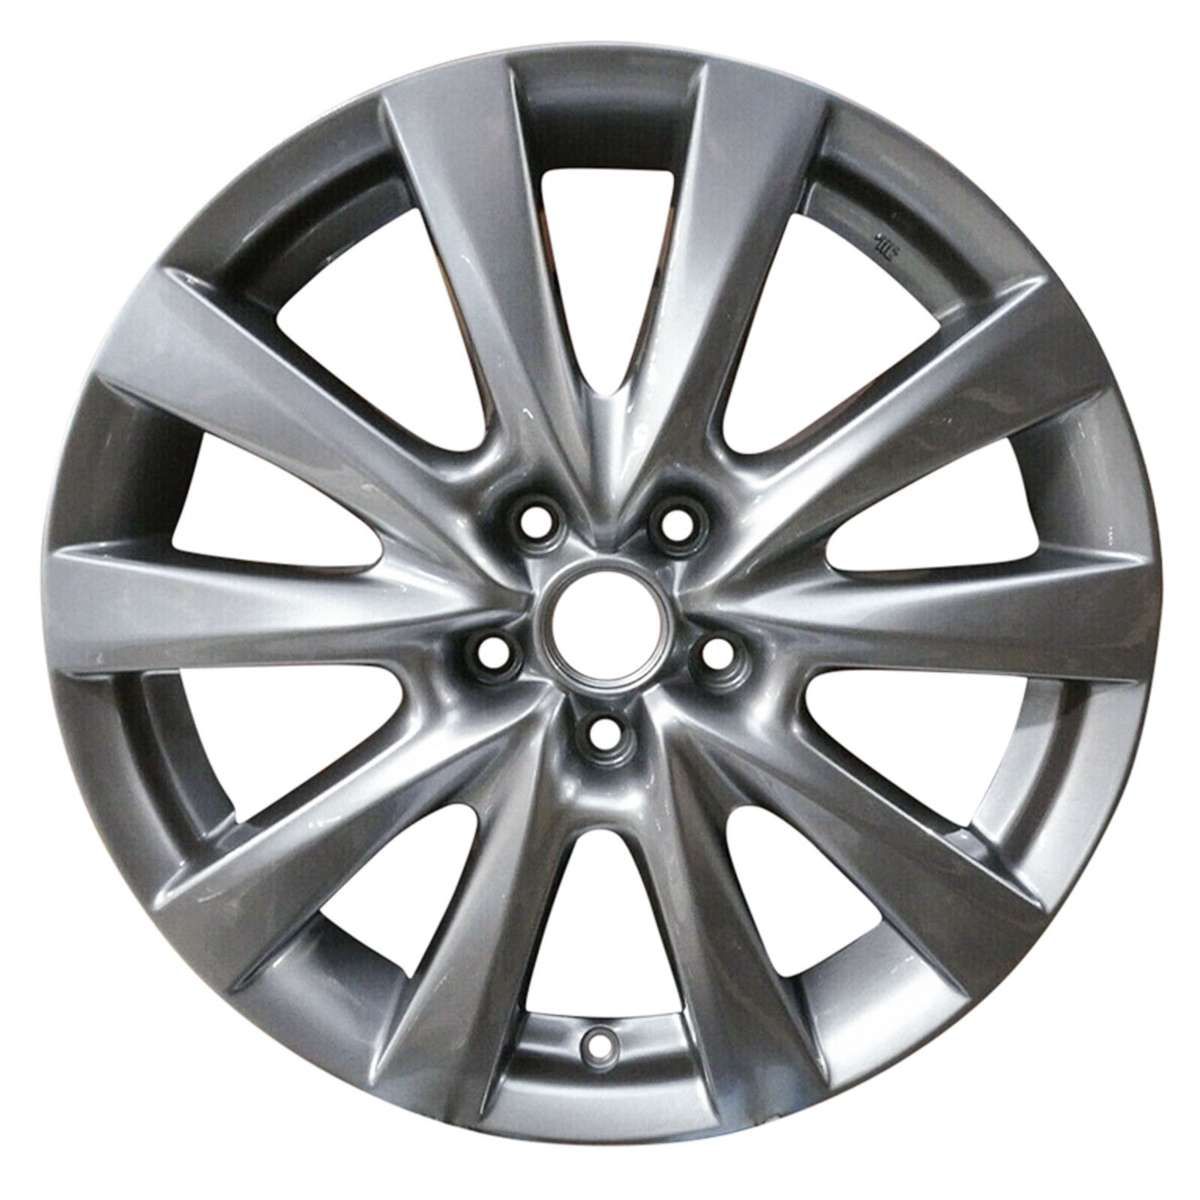 2021 Mazda 3 New 18" Replacement Wheel Rim RW64974C